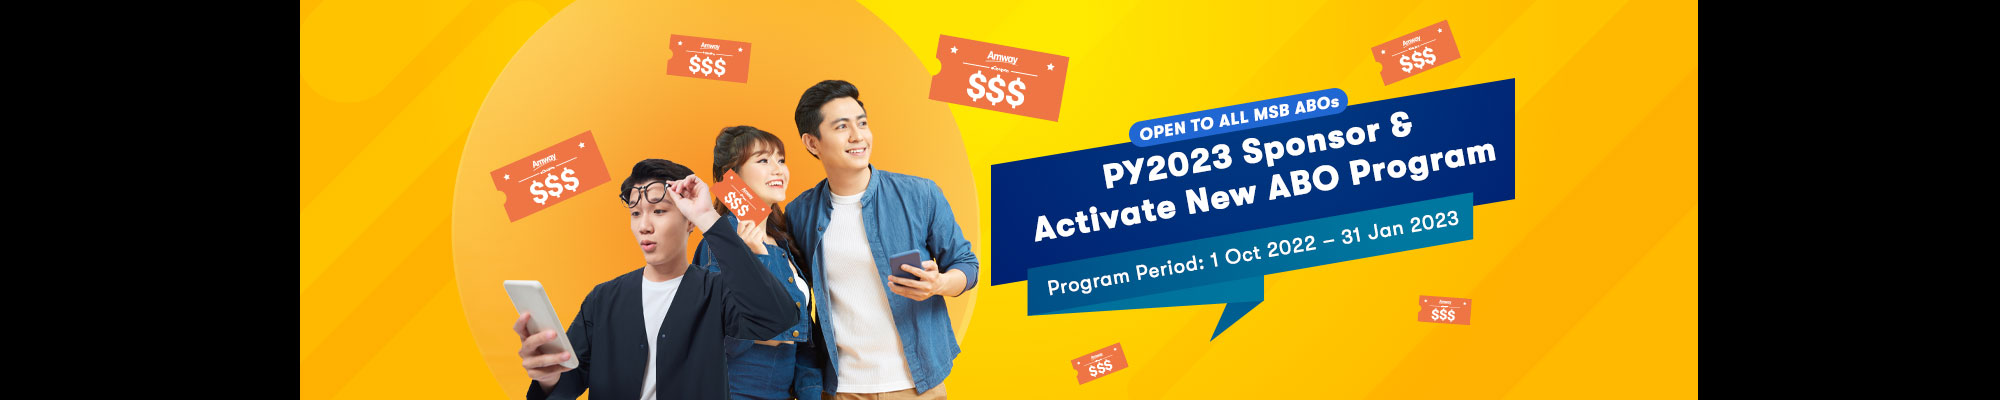 PY2023 Sponsor & Activate New ABO Programme